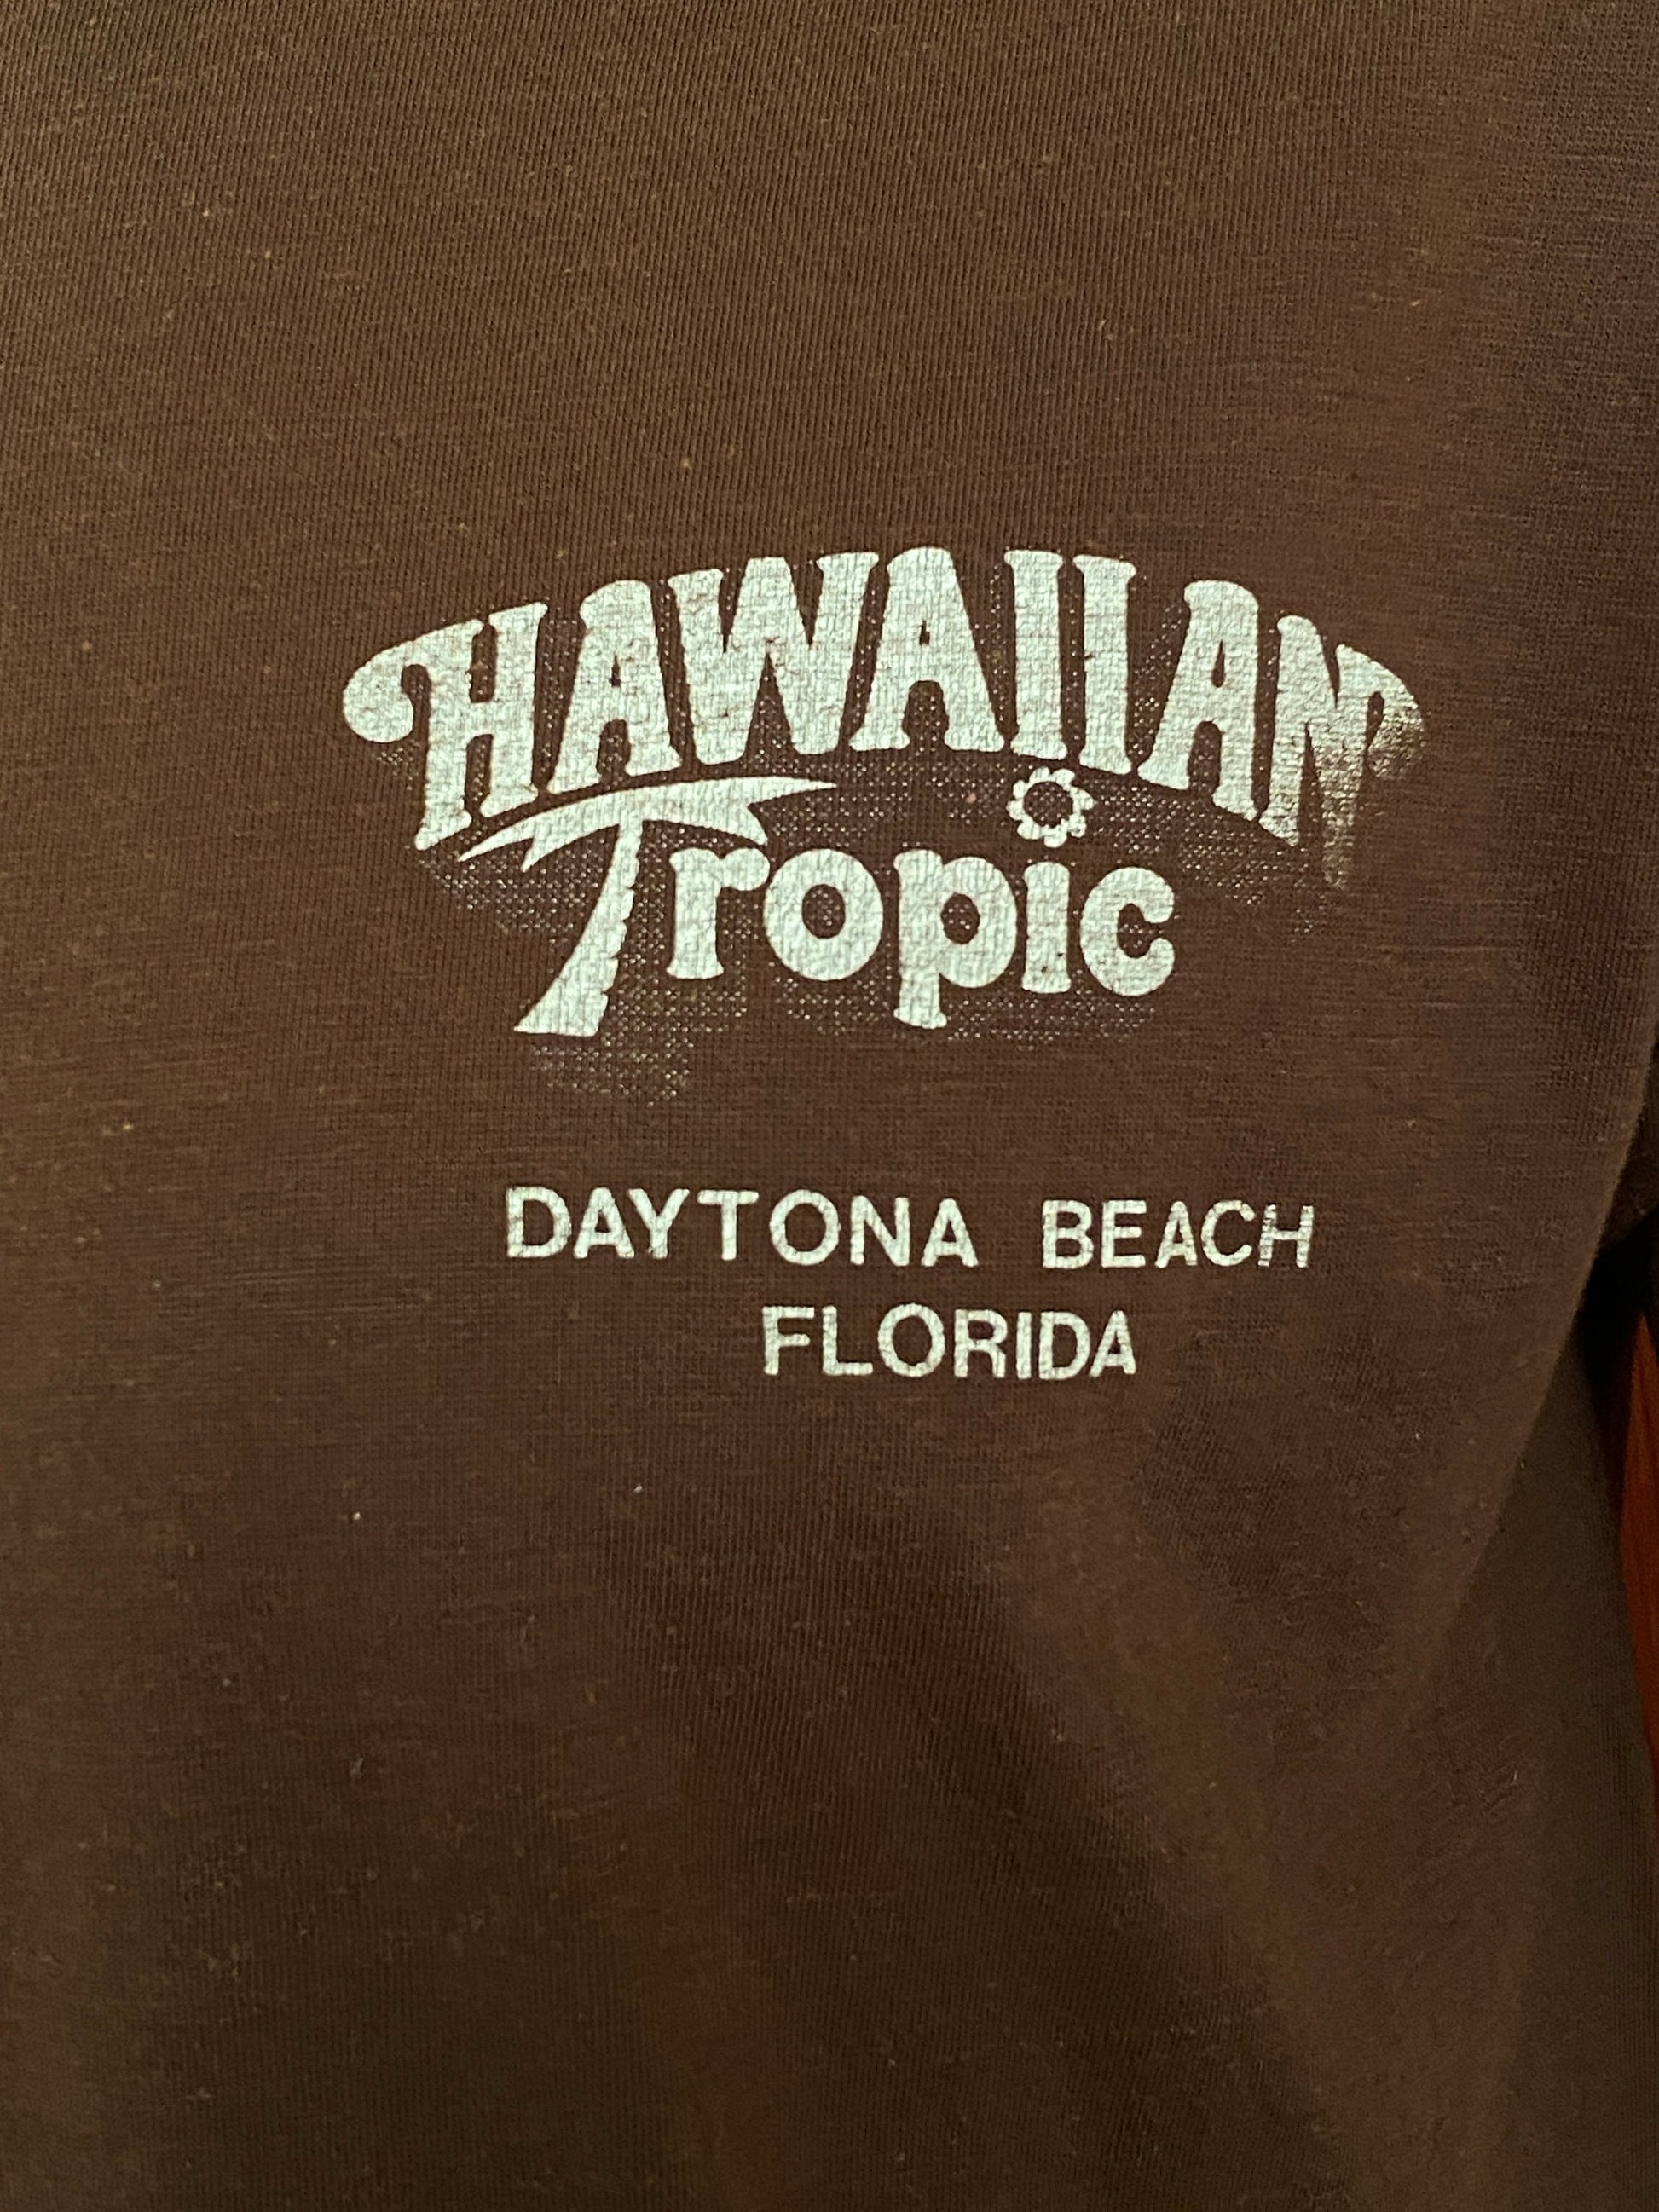 Large Vintage 50/50 Hawaiian Tropic 80s T-shirt: Classic Retro Apparel Made In USA